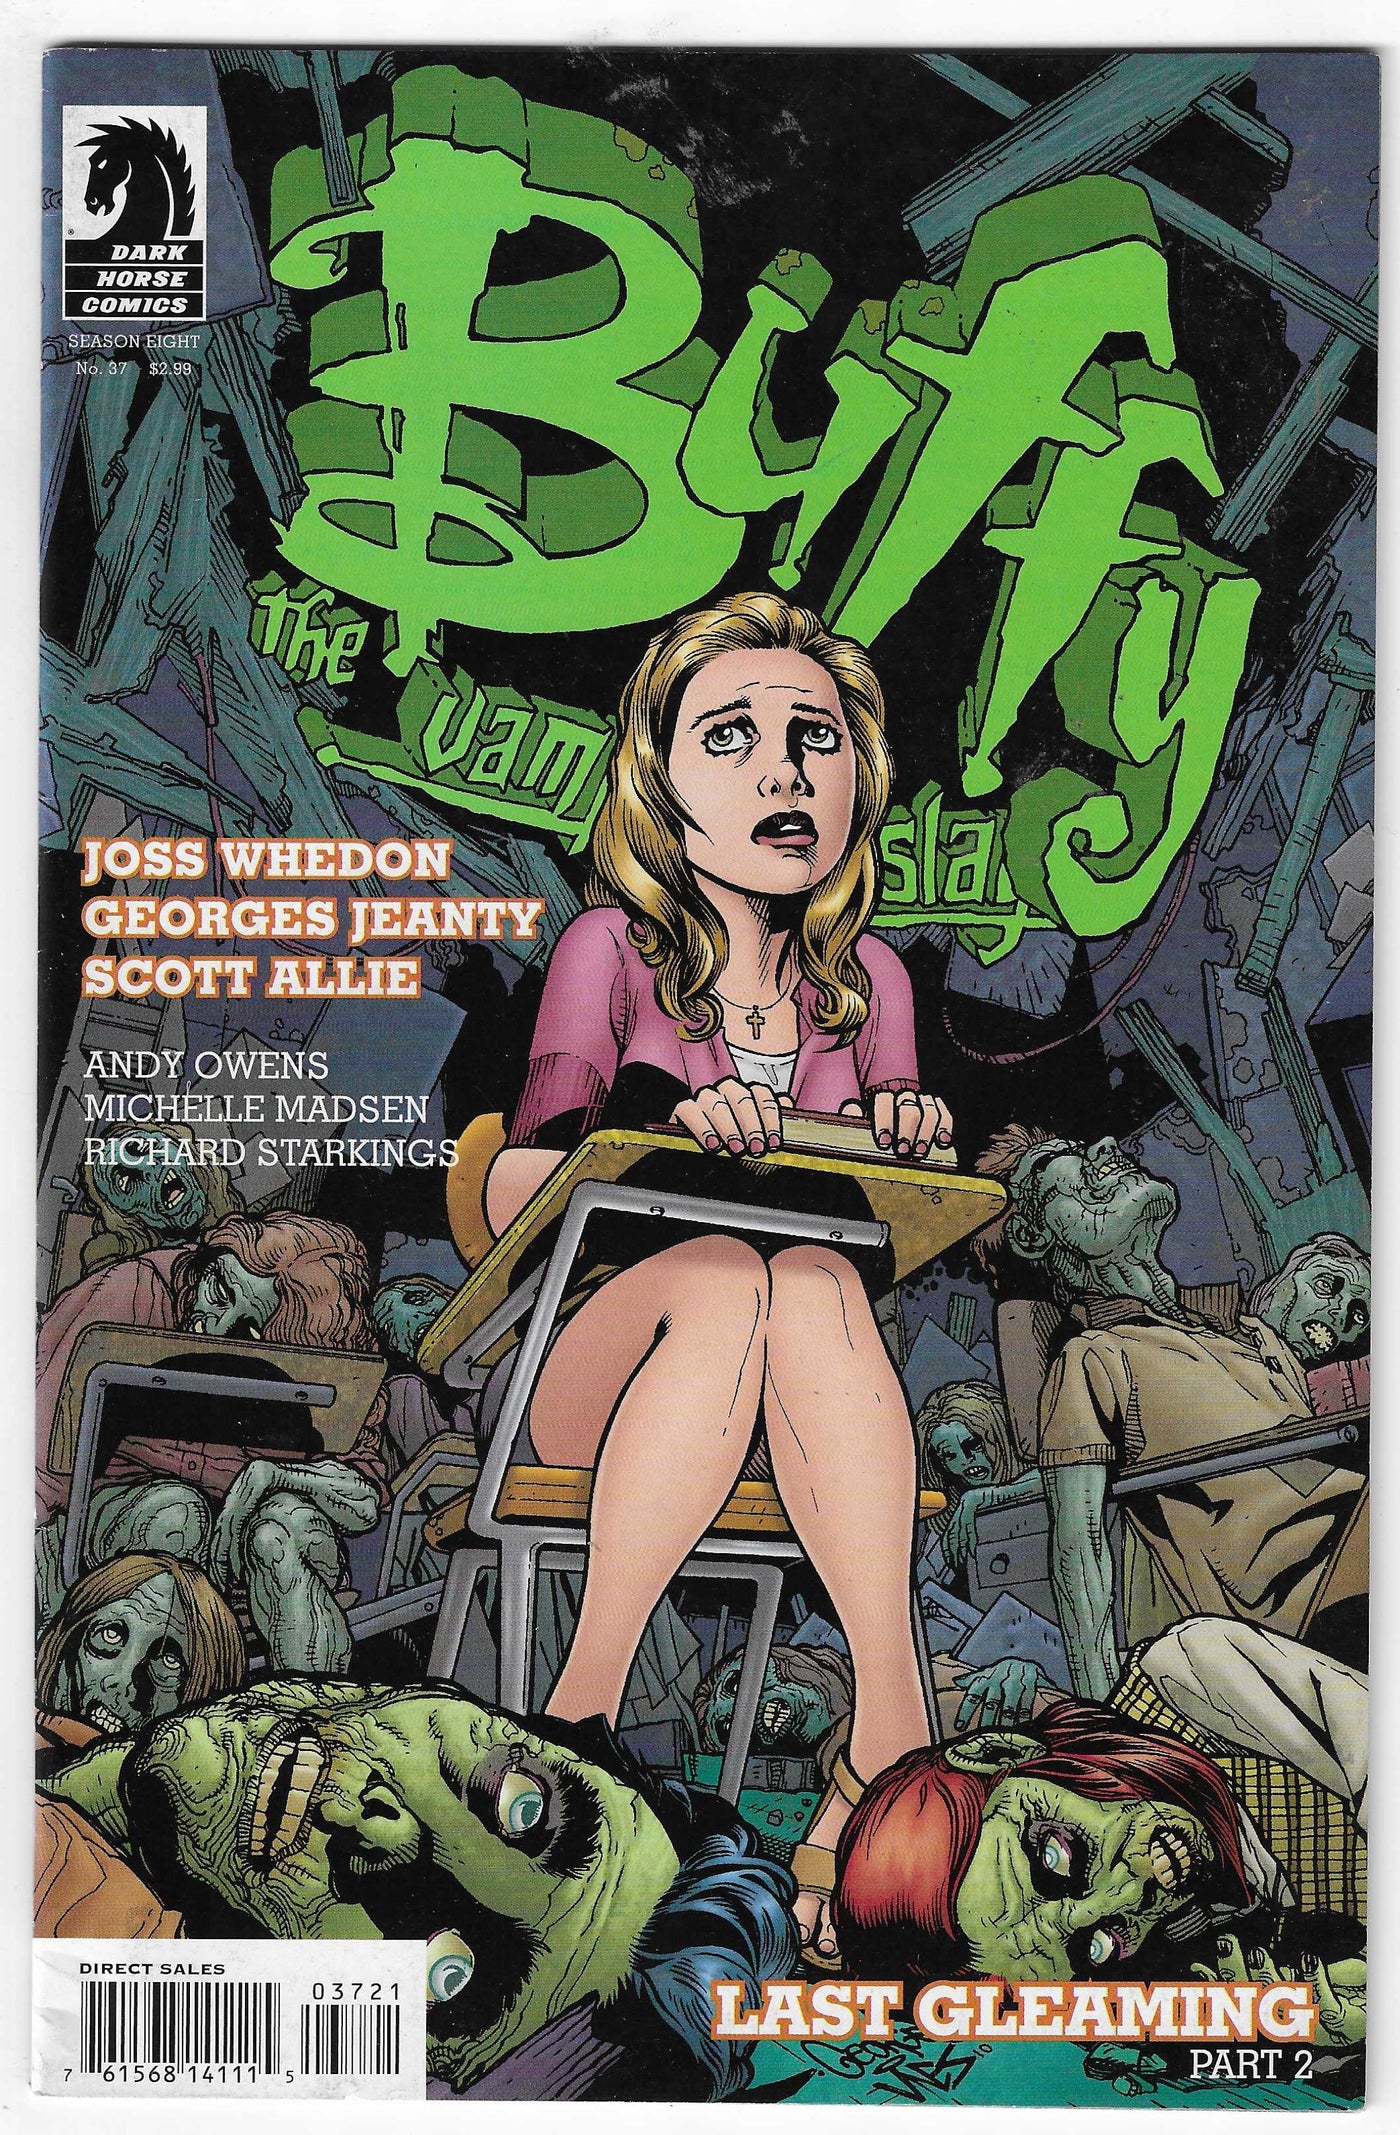 Buffy the Vampire Slayer (Season 8) #37